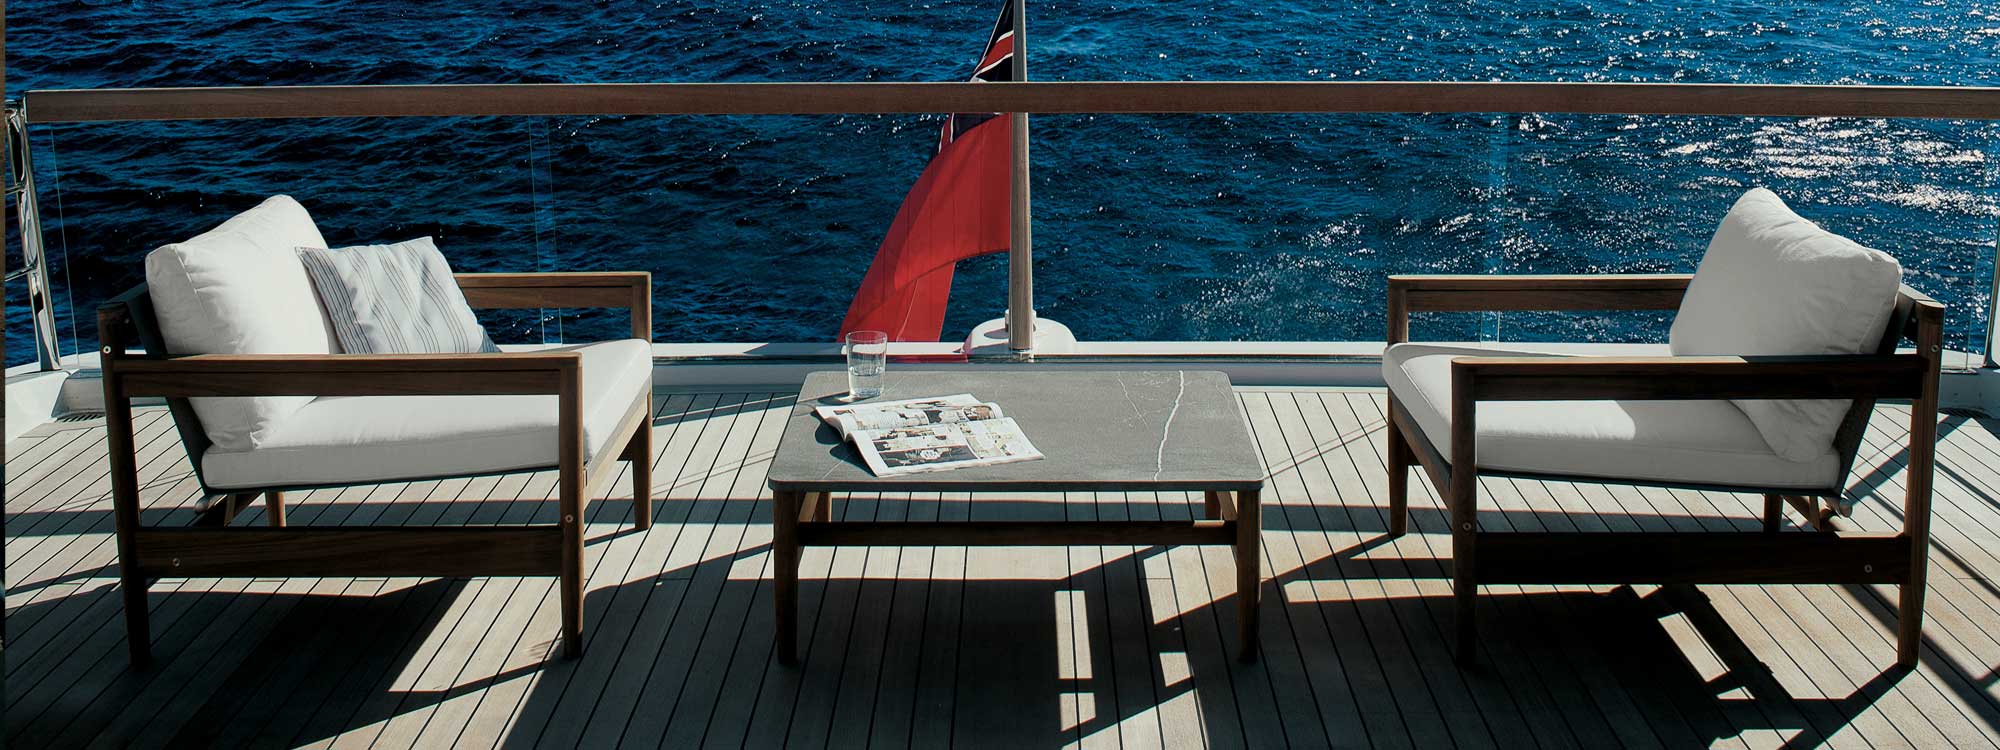 Road teak yacht furniture on aft deck of superyacht